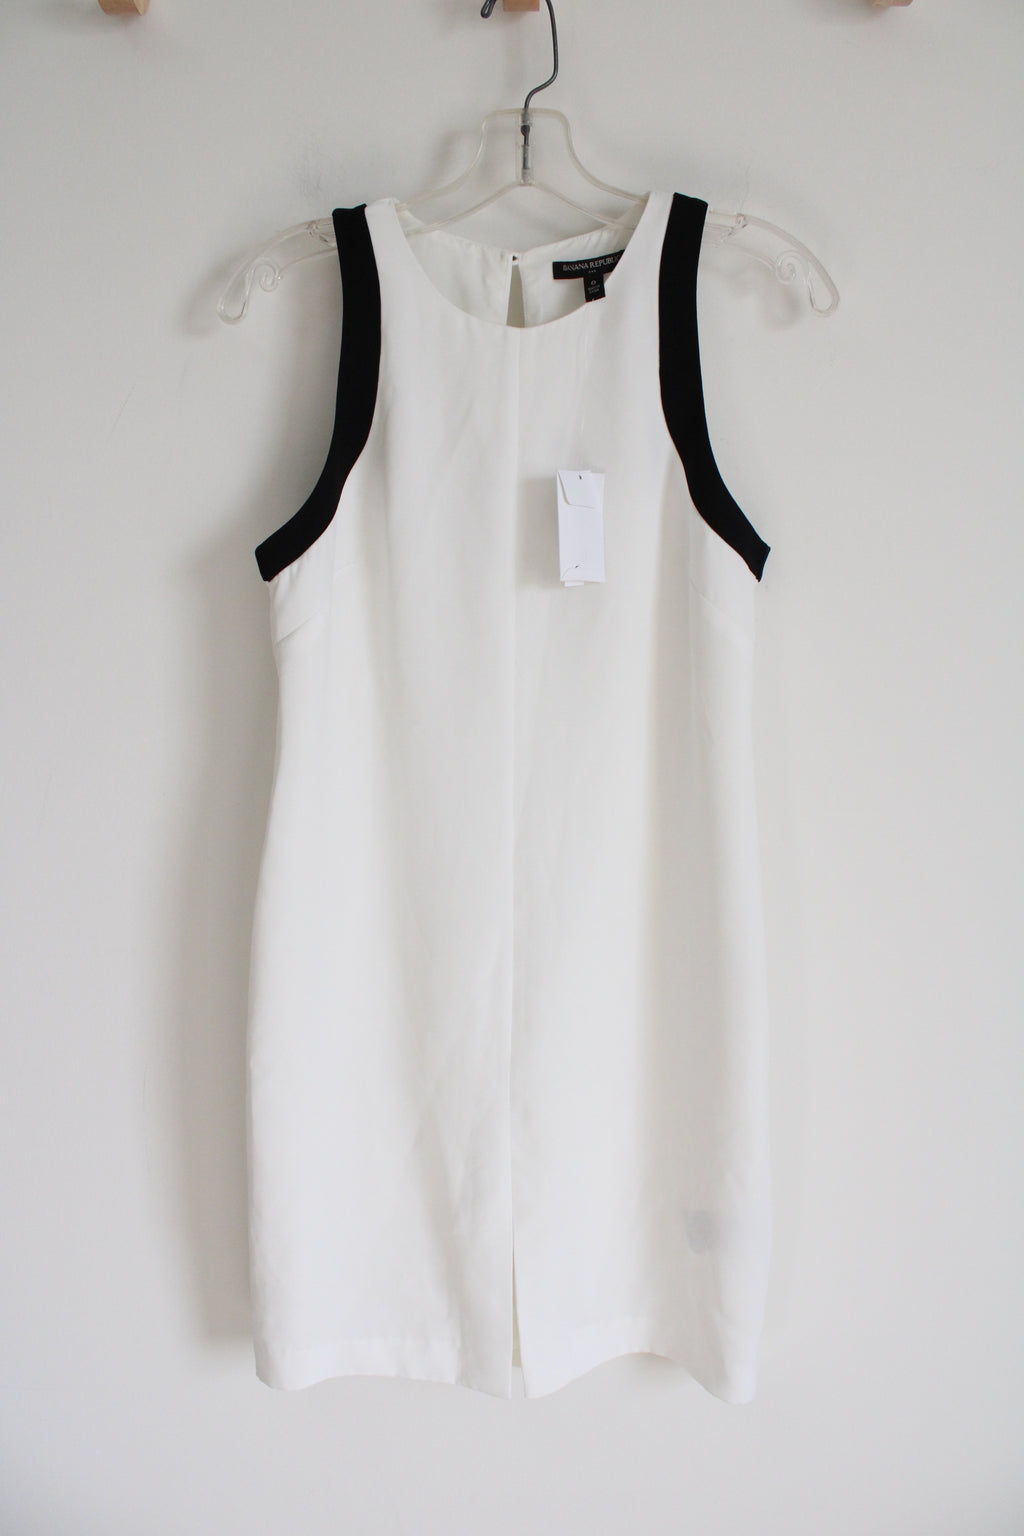 NEW Banana Republic White Black Fitted Dress | 0